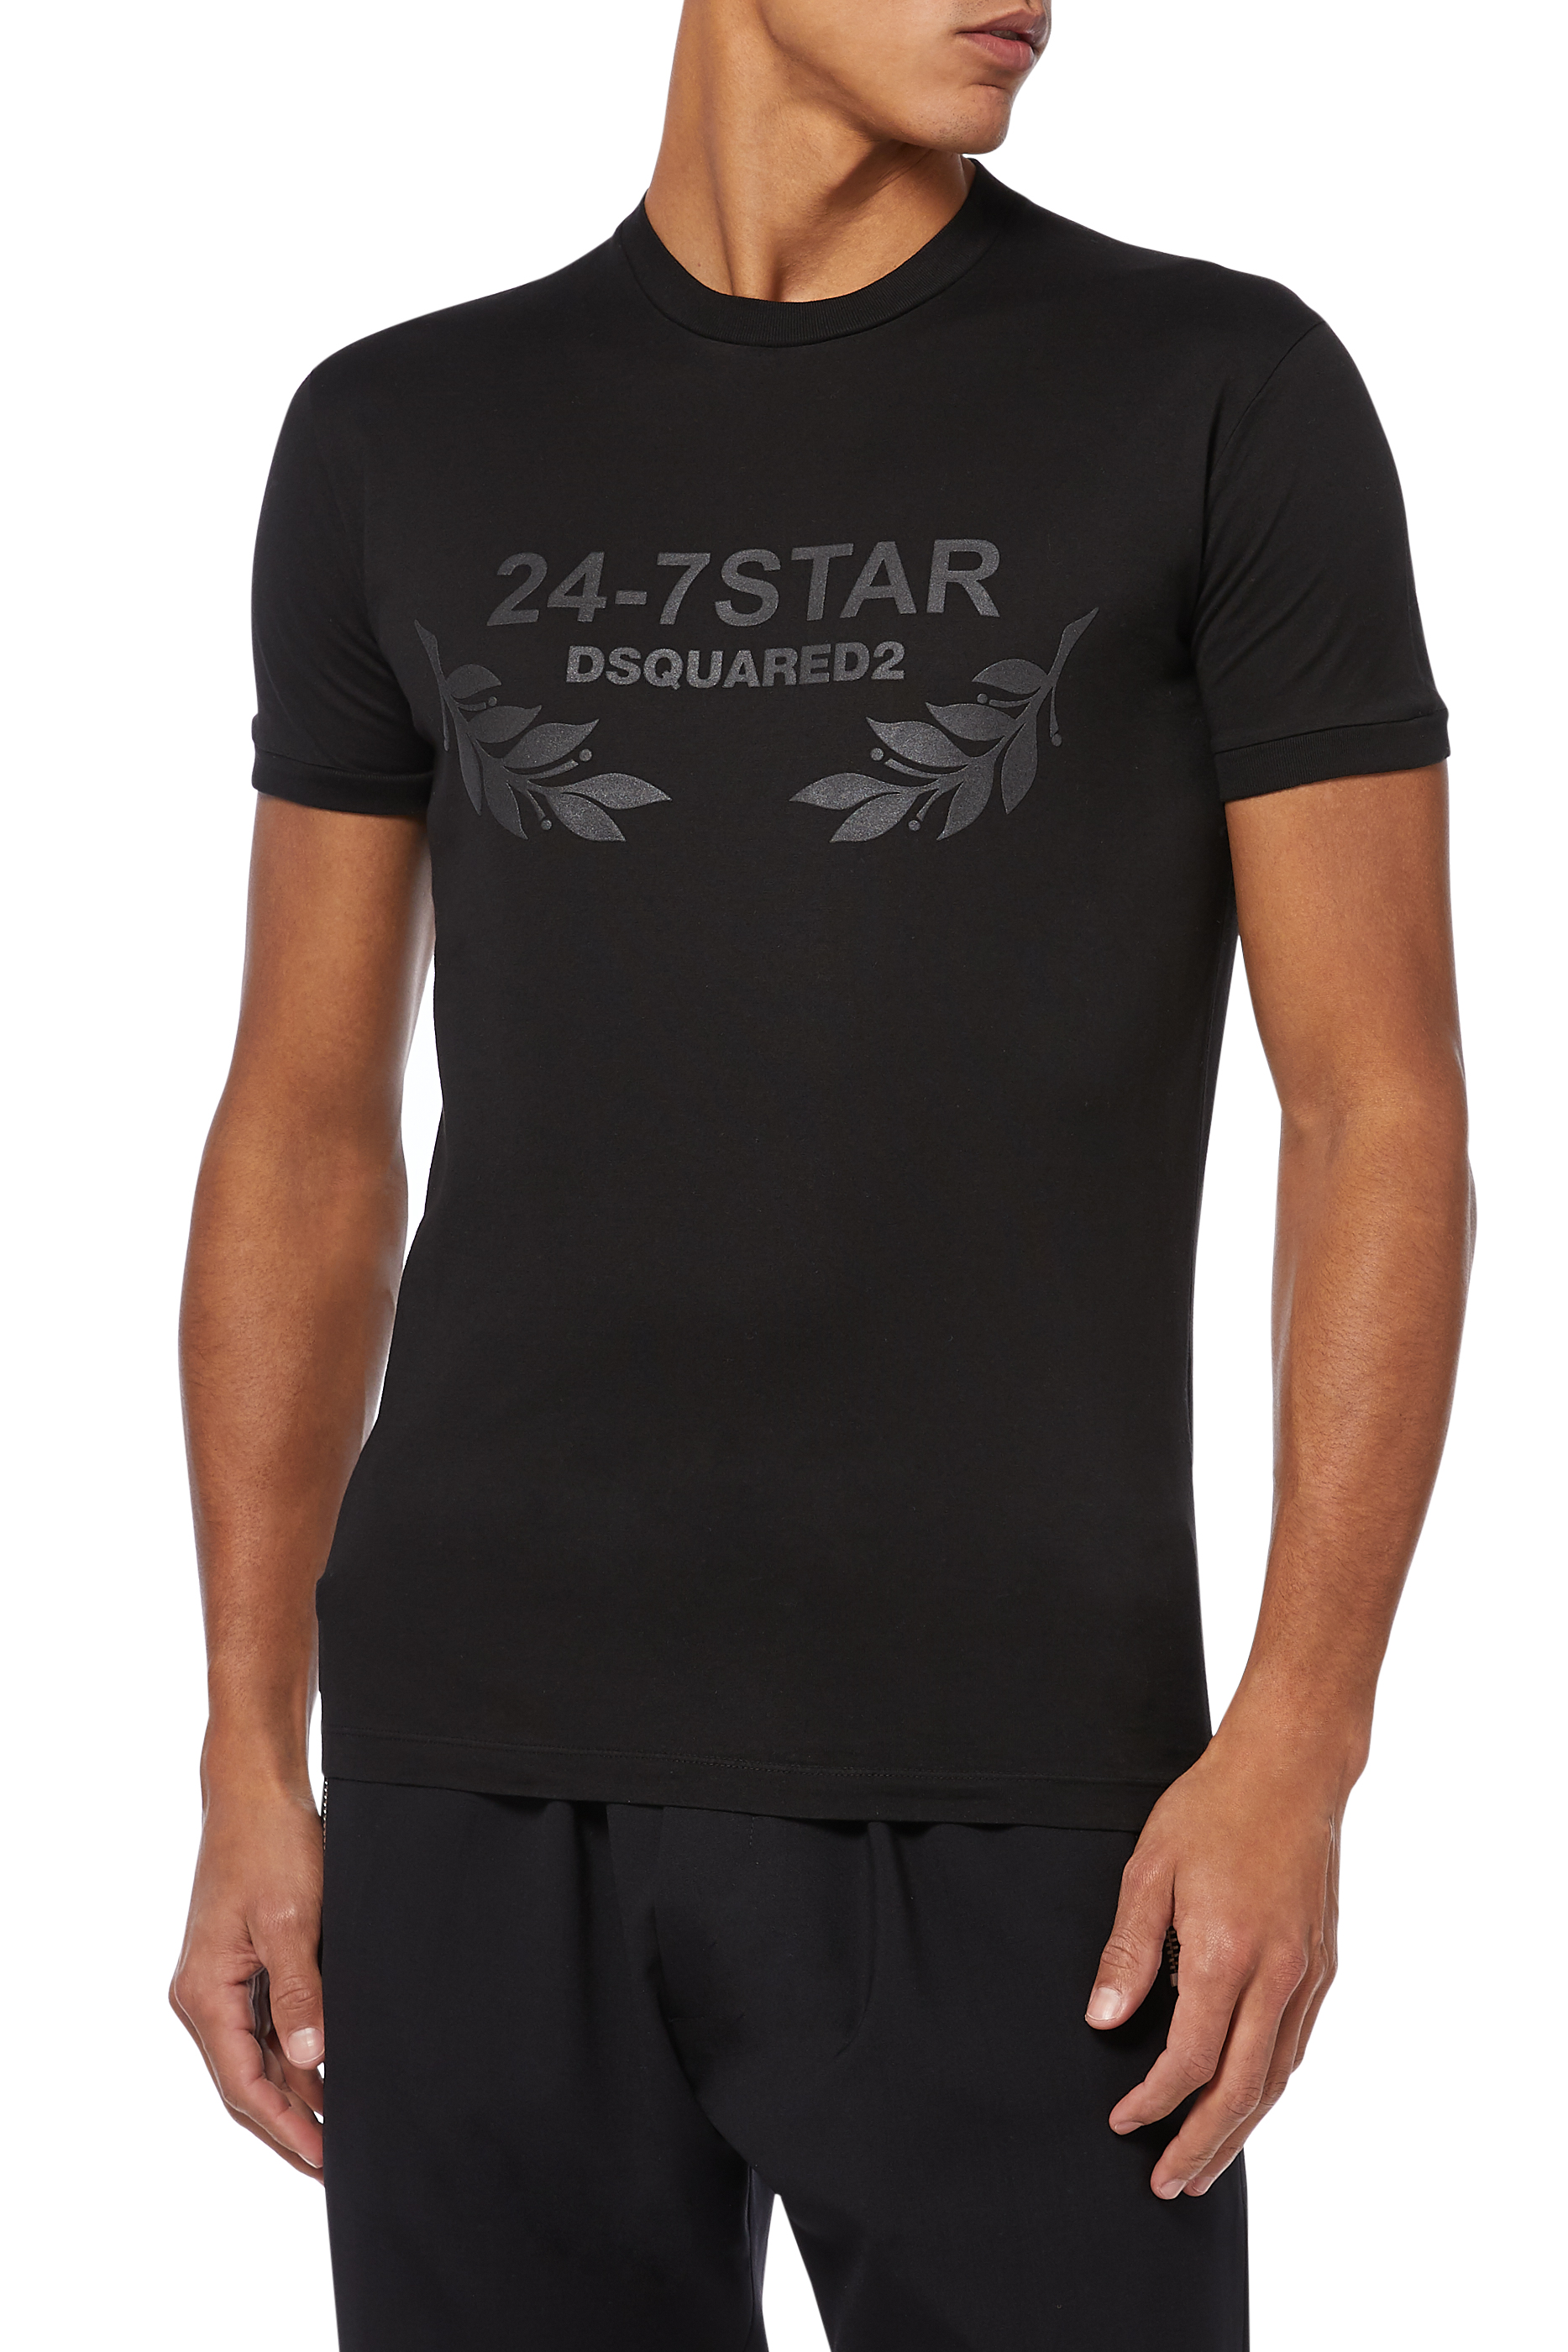 dsquared2 shirt 24 7 star